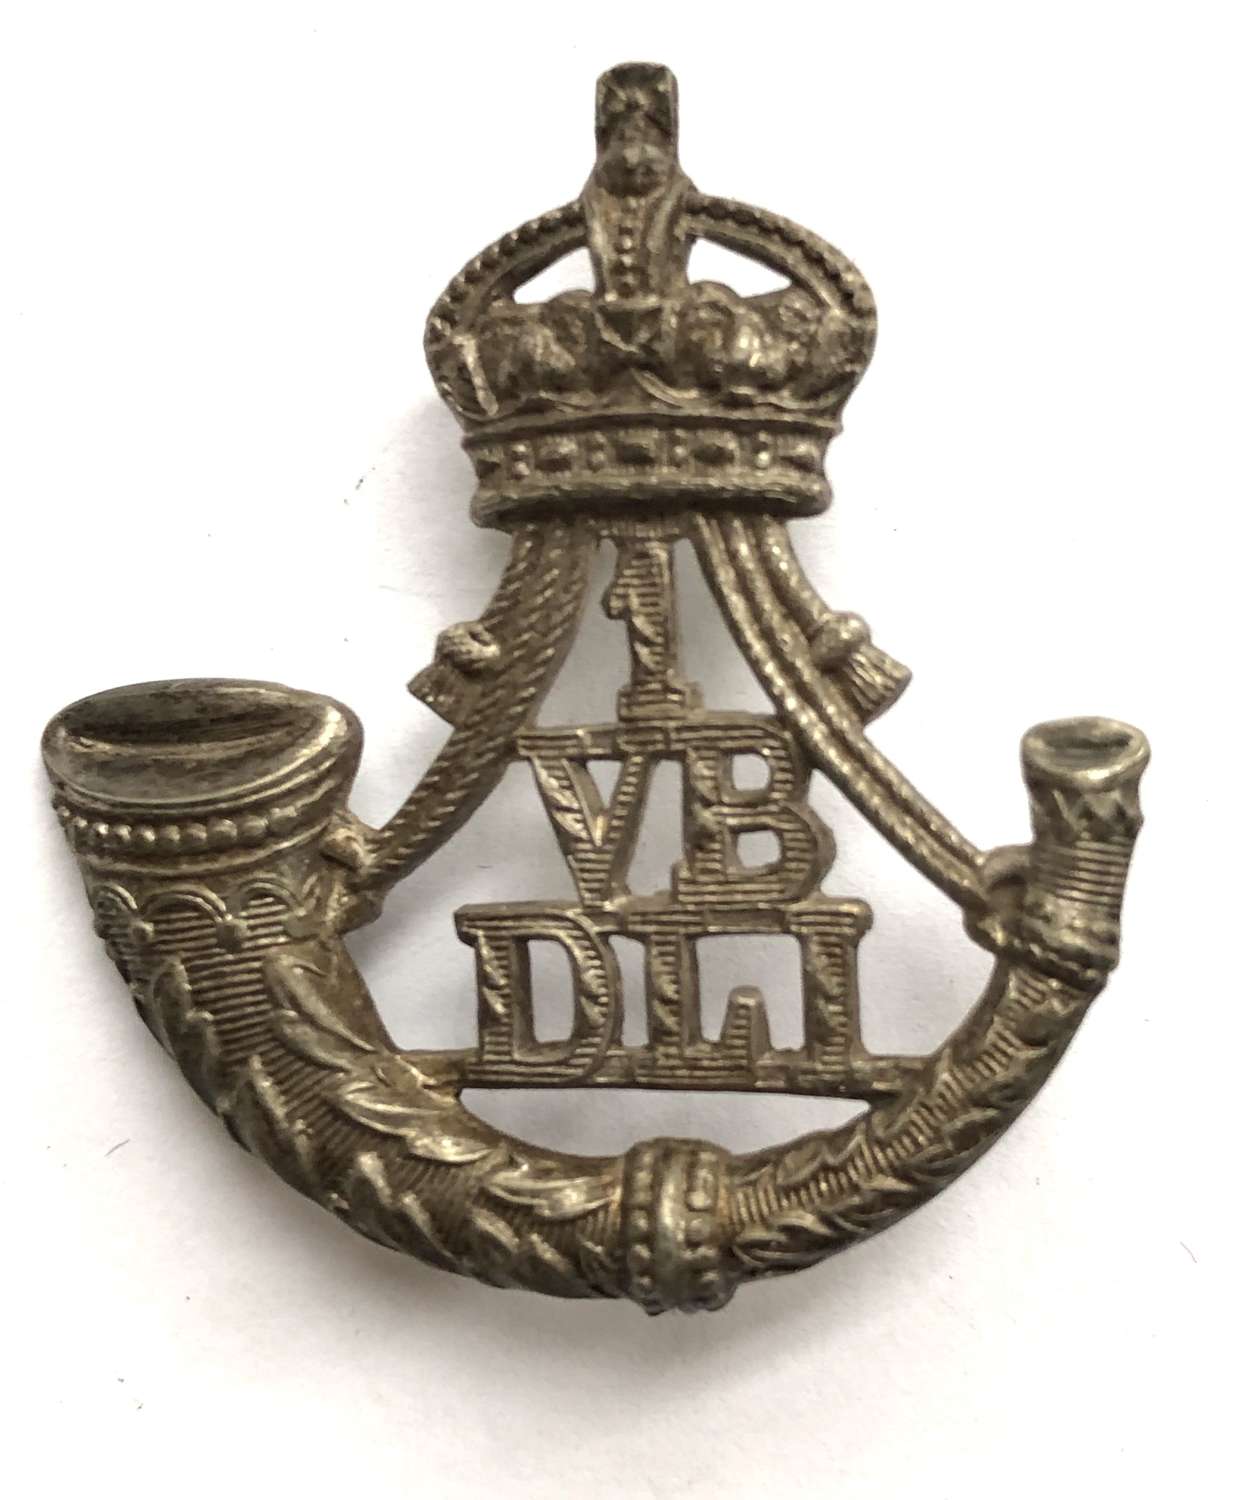 1st VB (Stockton on Tees) Durham Light Infantry cap badge c1901-08